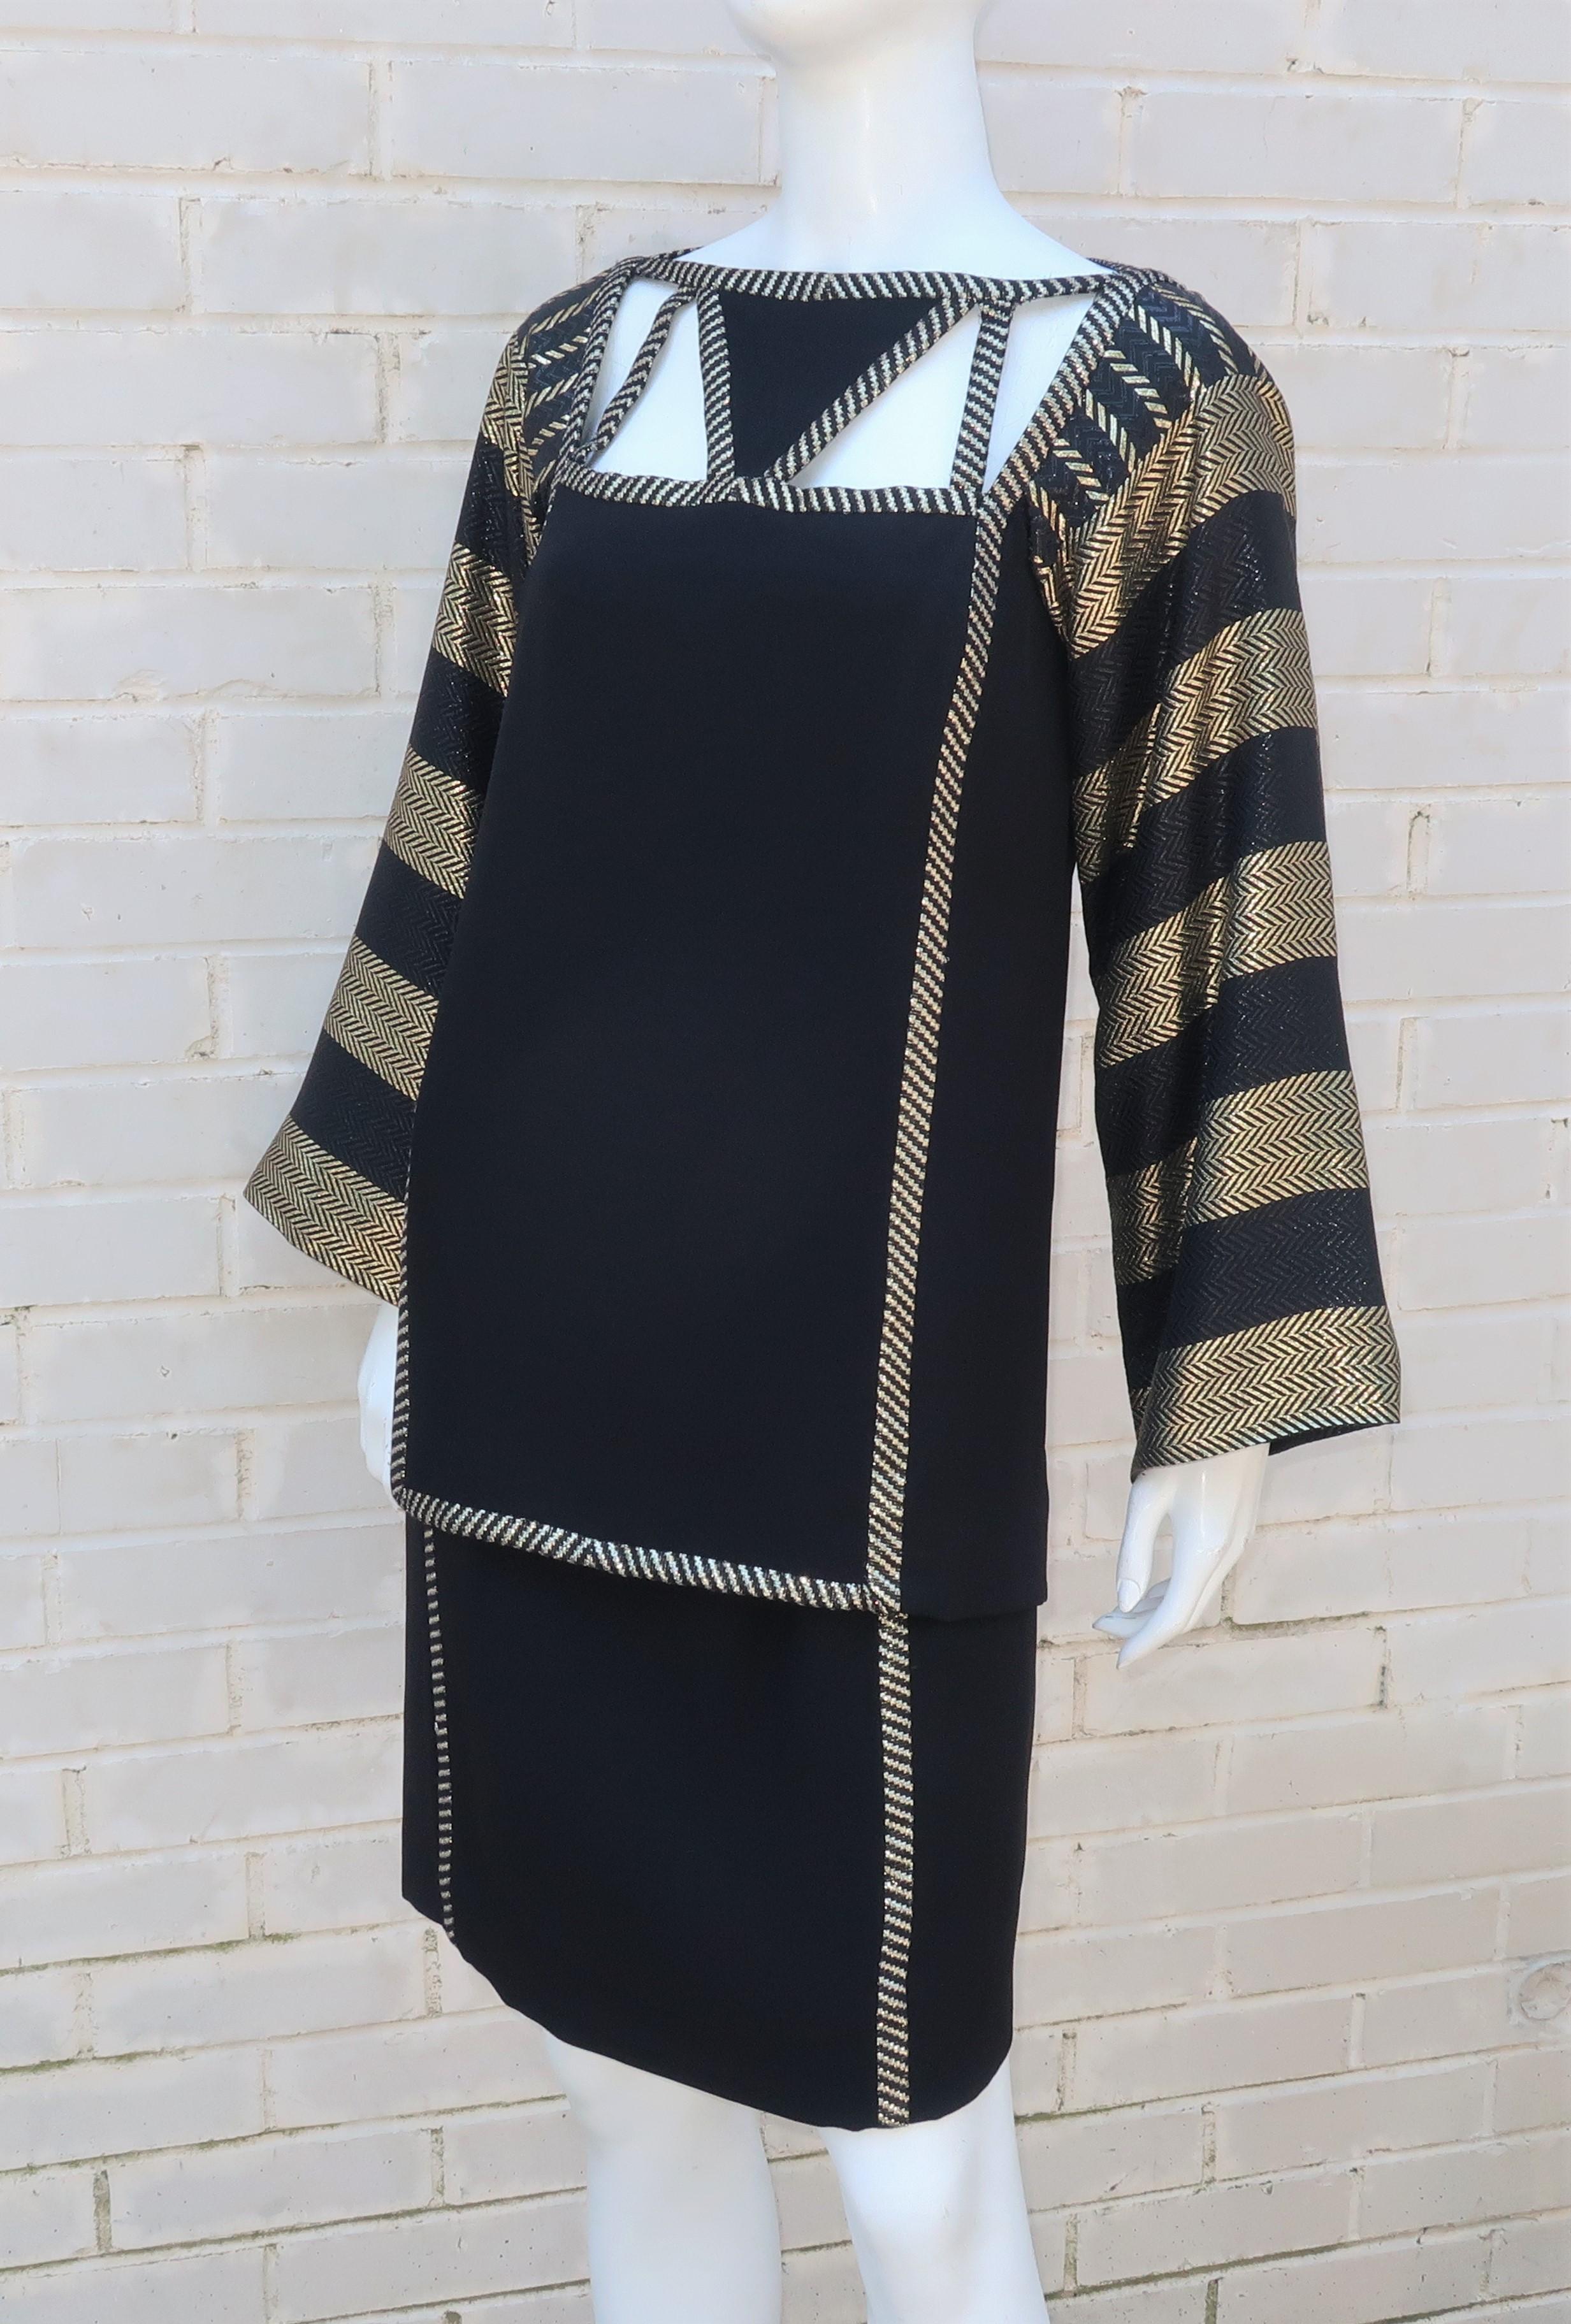 Bob Mackie Black & Gold Lamé Dress, 1970’s 2